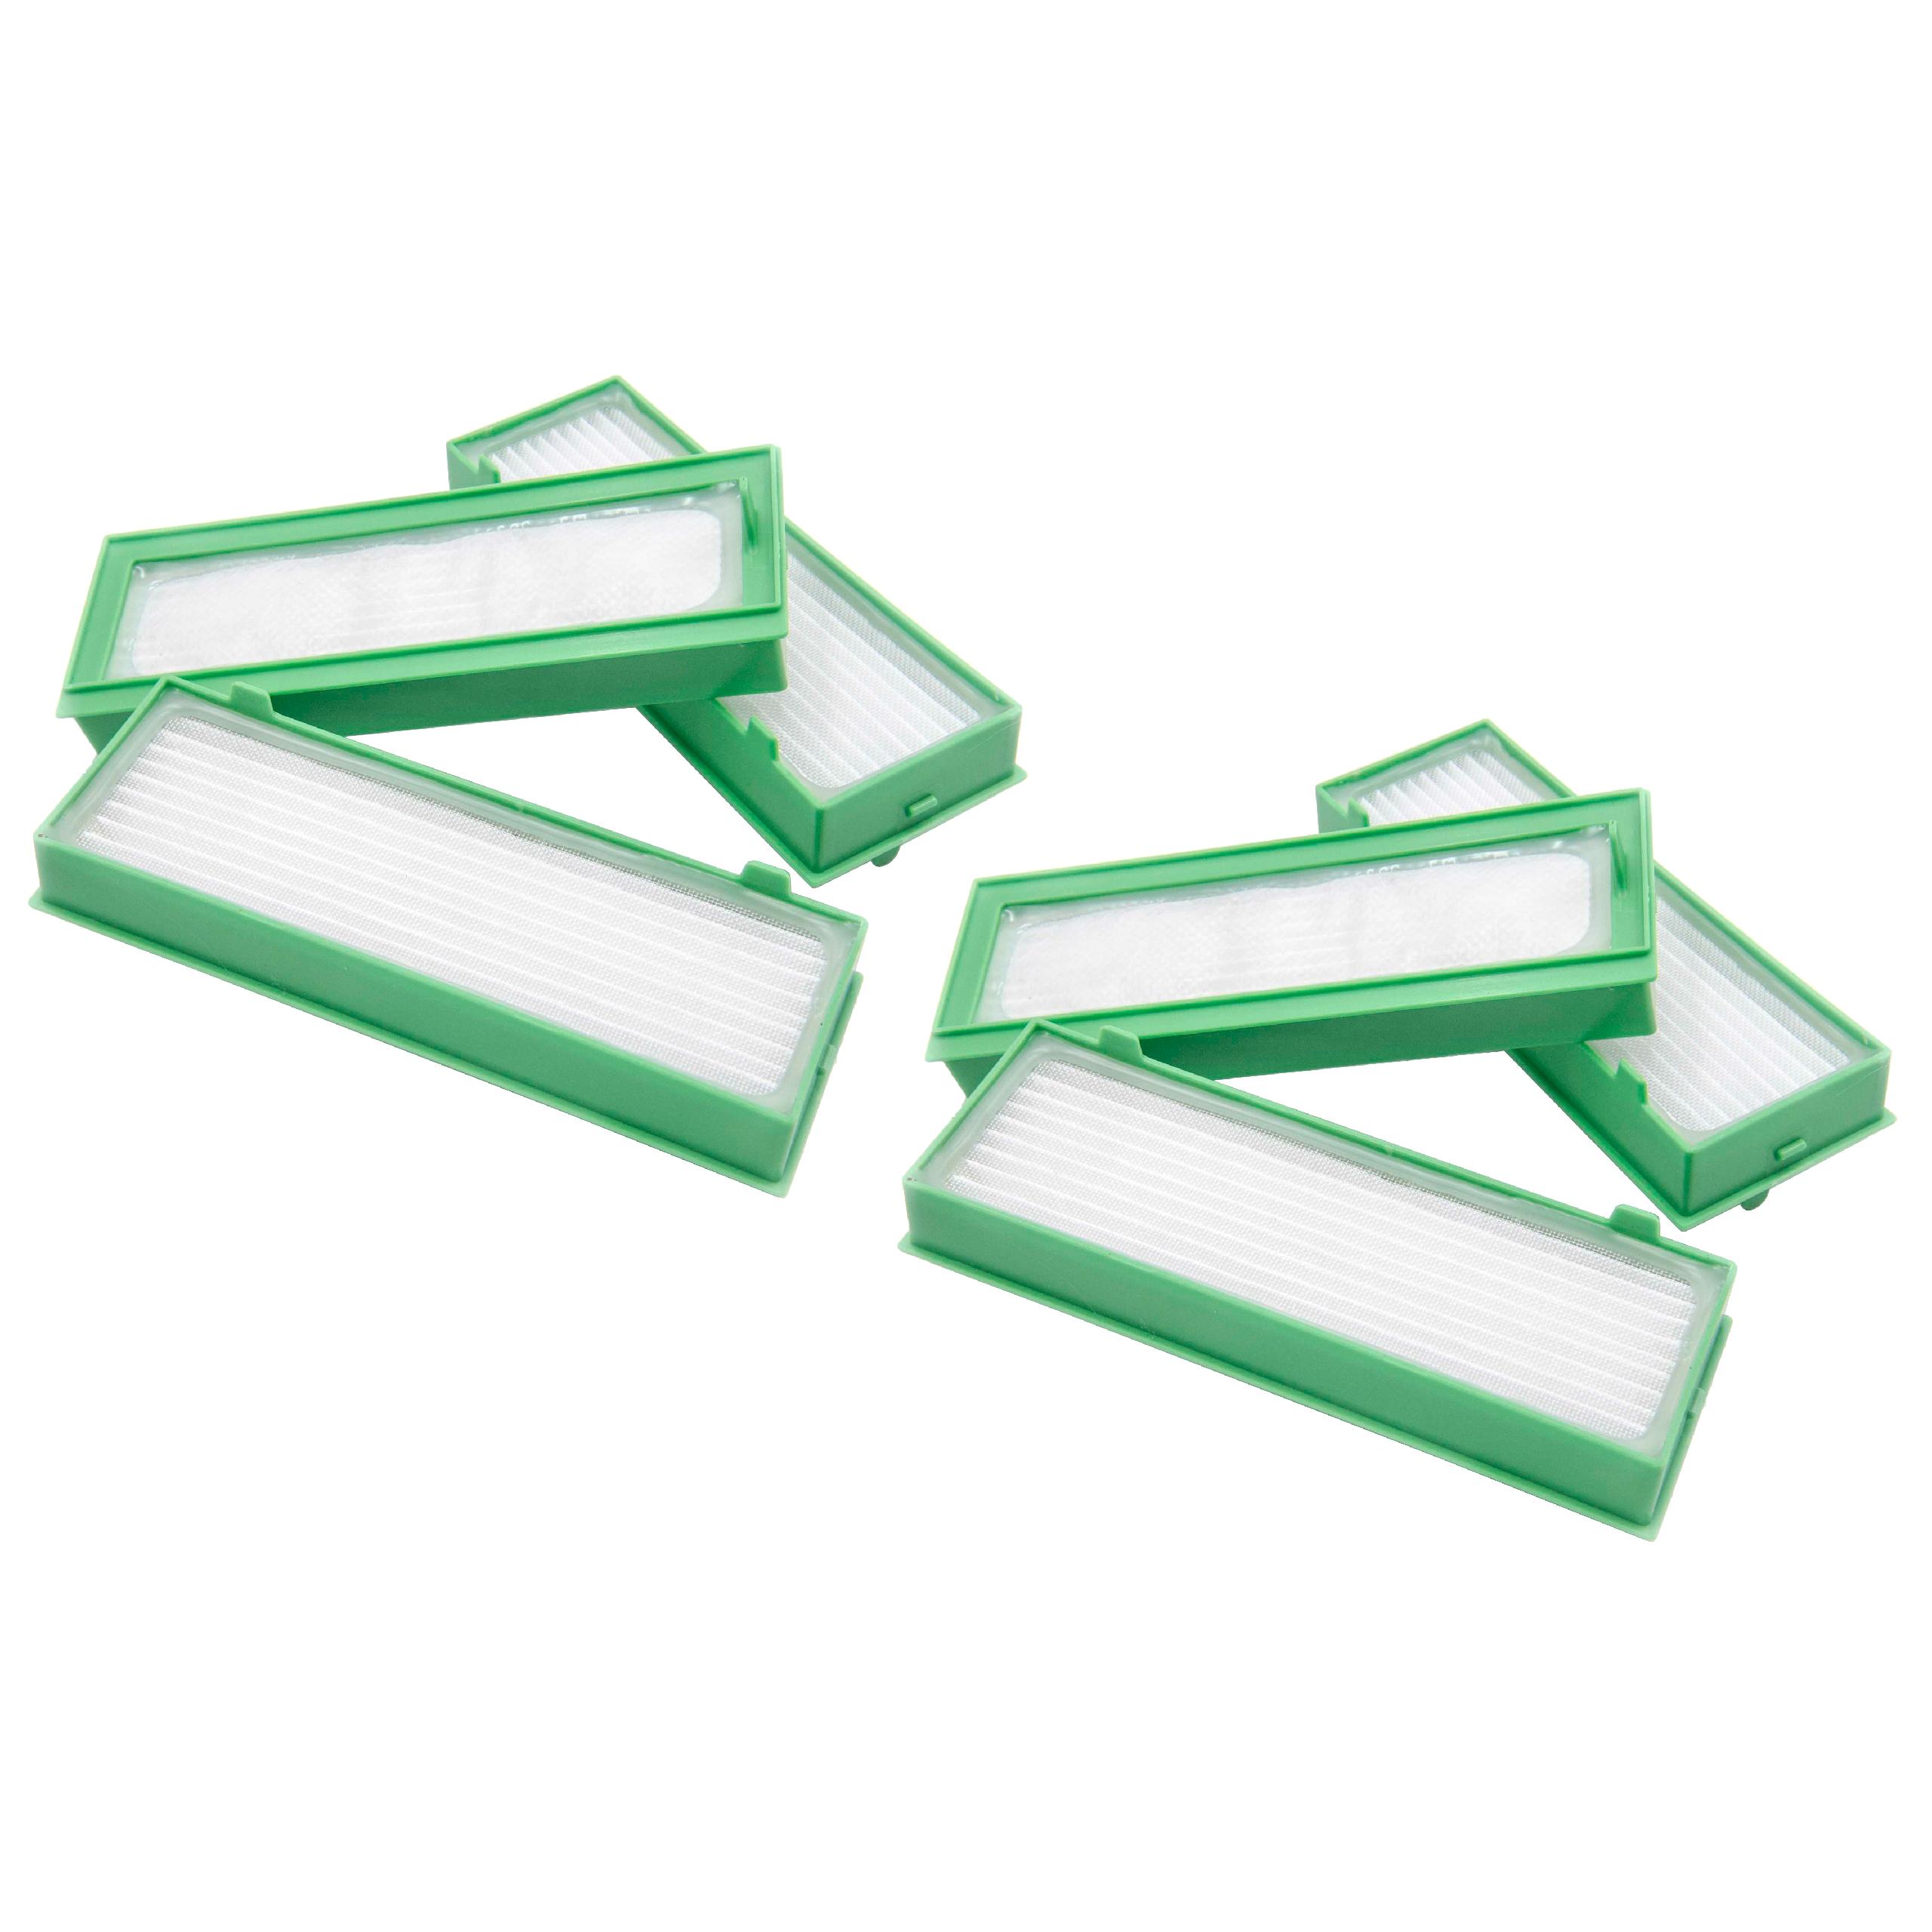 6x Filtro per aspirapolvere Vorwerk folletto - filtro HEPA, bianco / verde